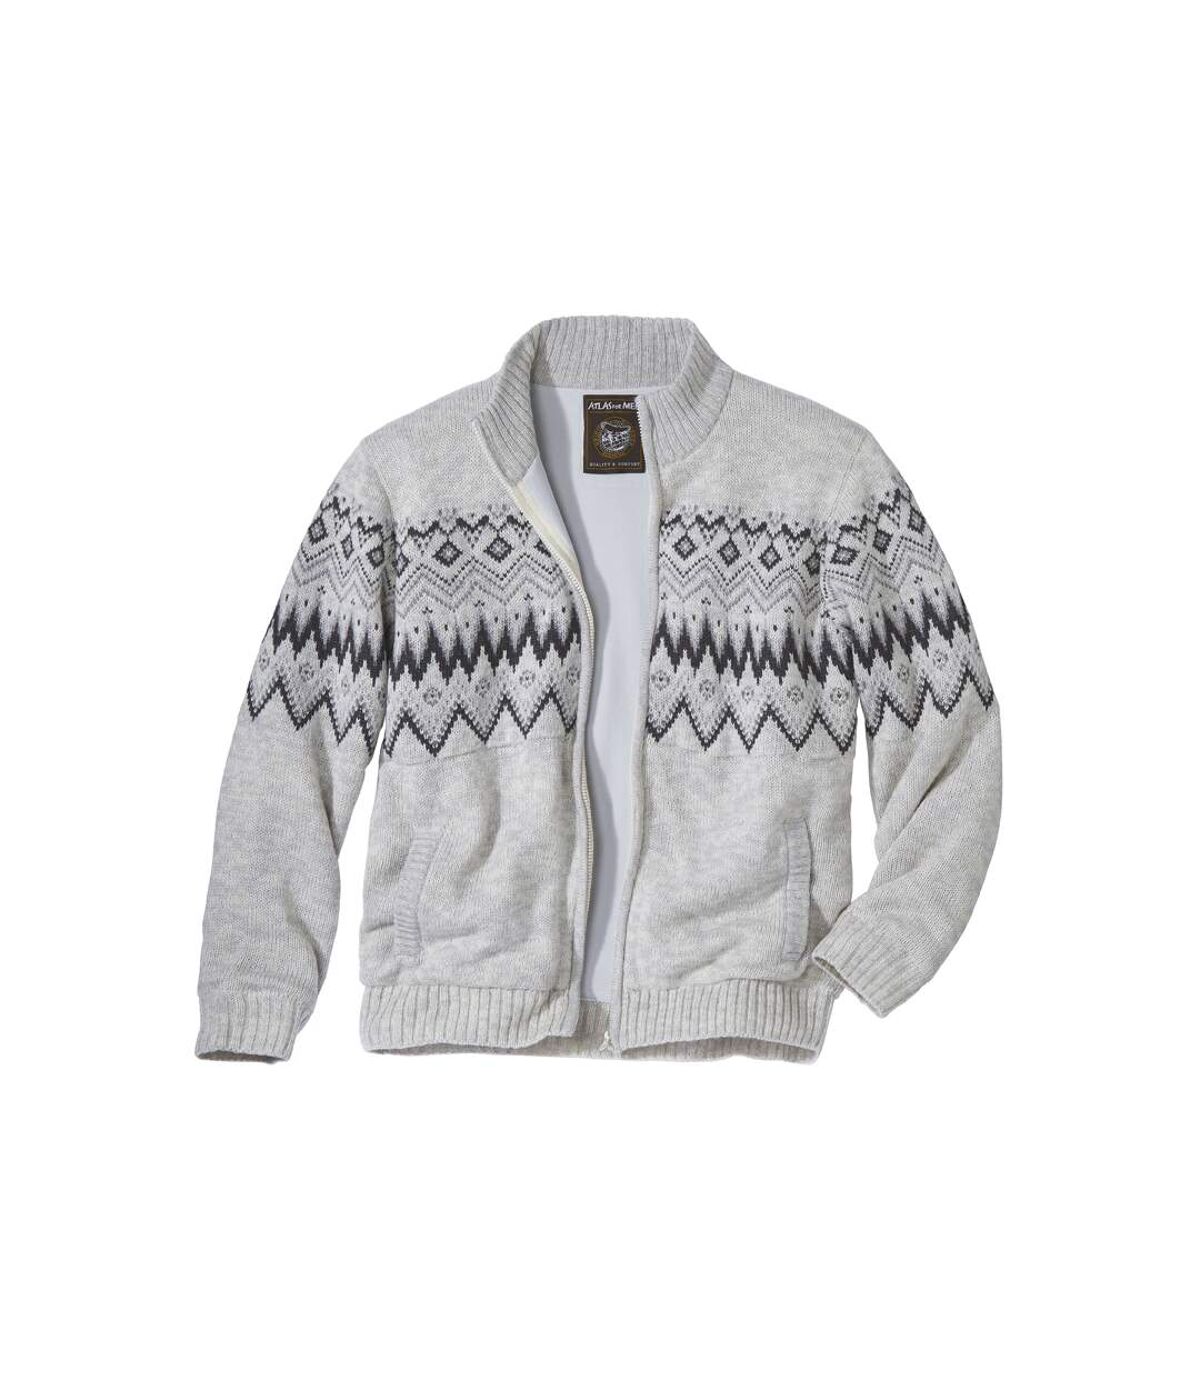 Hřejivý svetr s žakárovým vzorem z kombinovaného materiálu úplet/fleece Atlas For Men